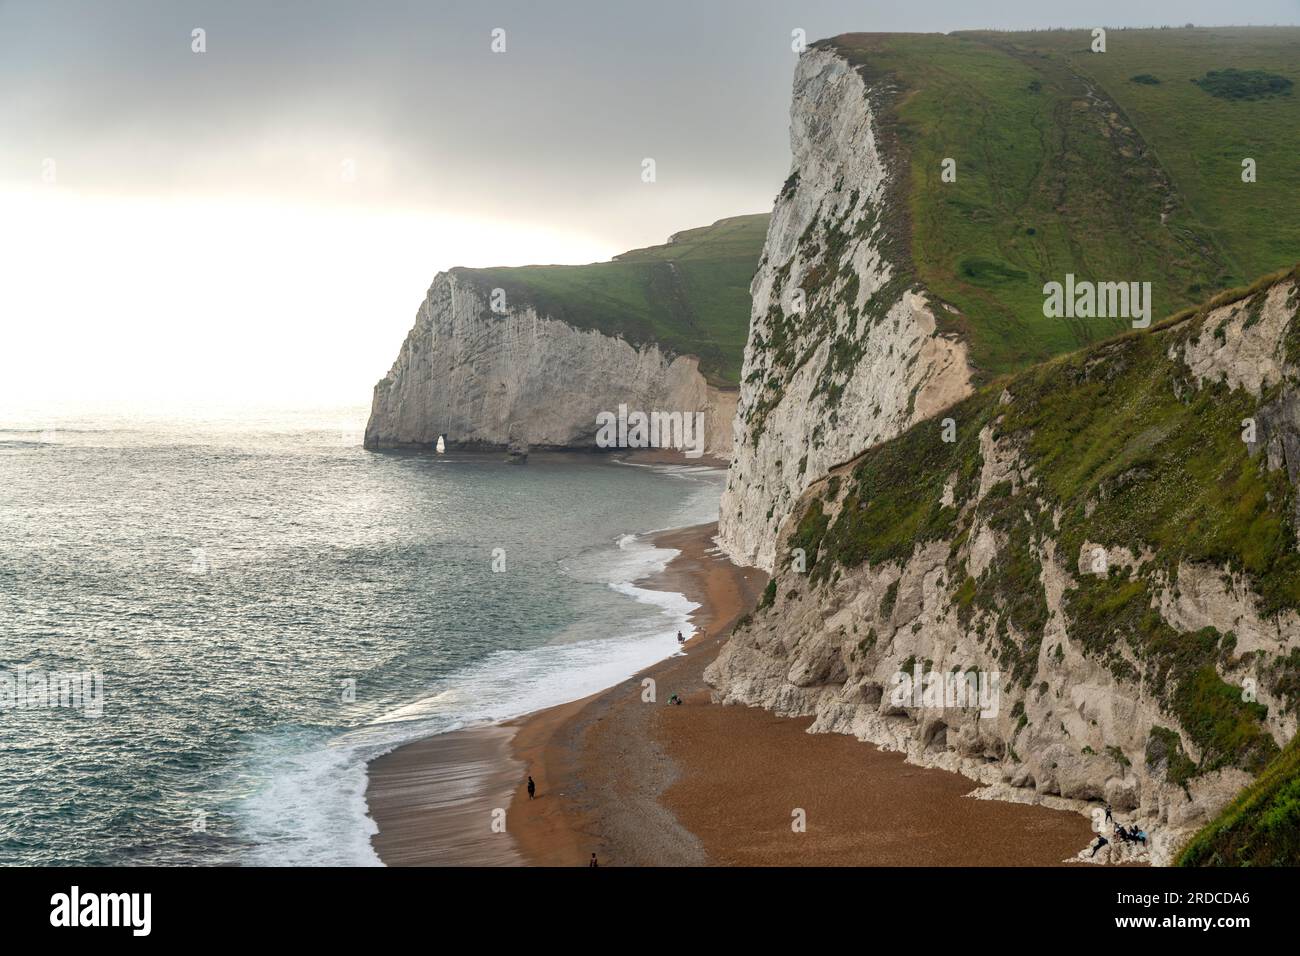 Weisse Klippen und Strand des UNESCO Weltnaturerbe Jurassic Coast, Inghilterra, Großbritannien, Europa | scogliere bianche e spiaggia dell'herit mondiale dell'UNESCO Foto Stock